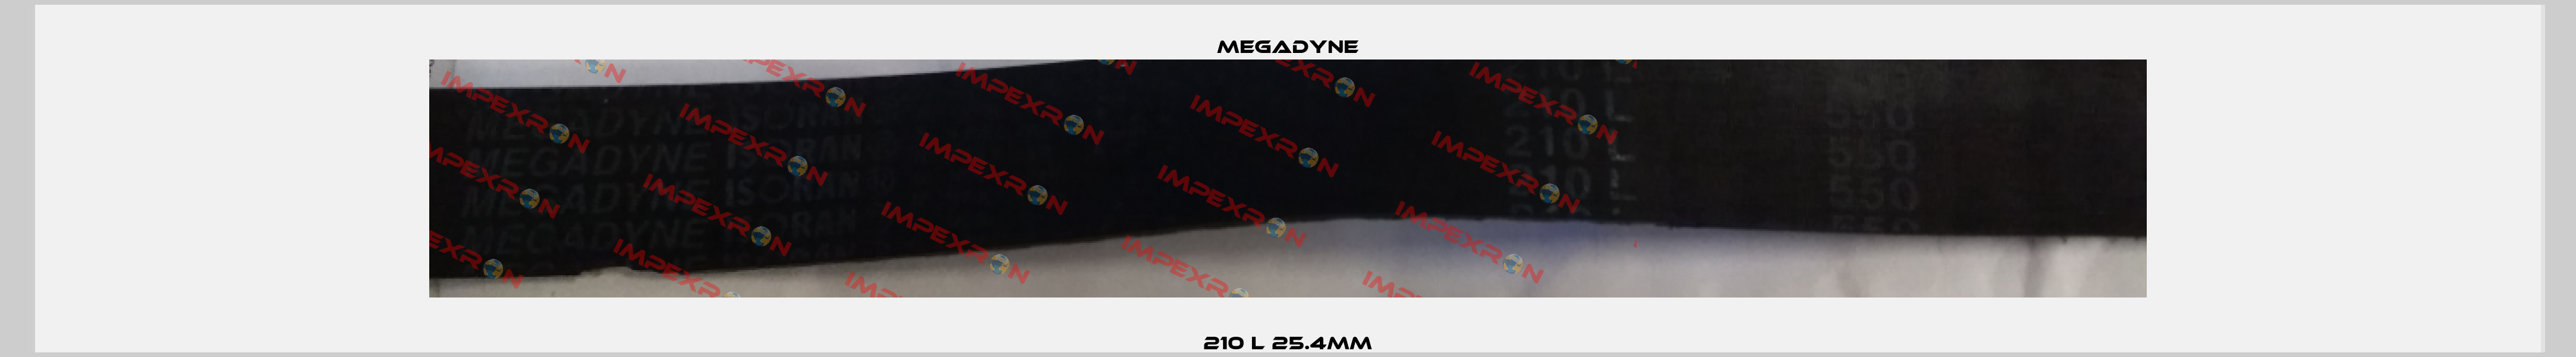 210 L 25.4mm Megadyne